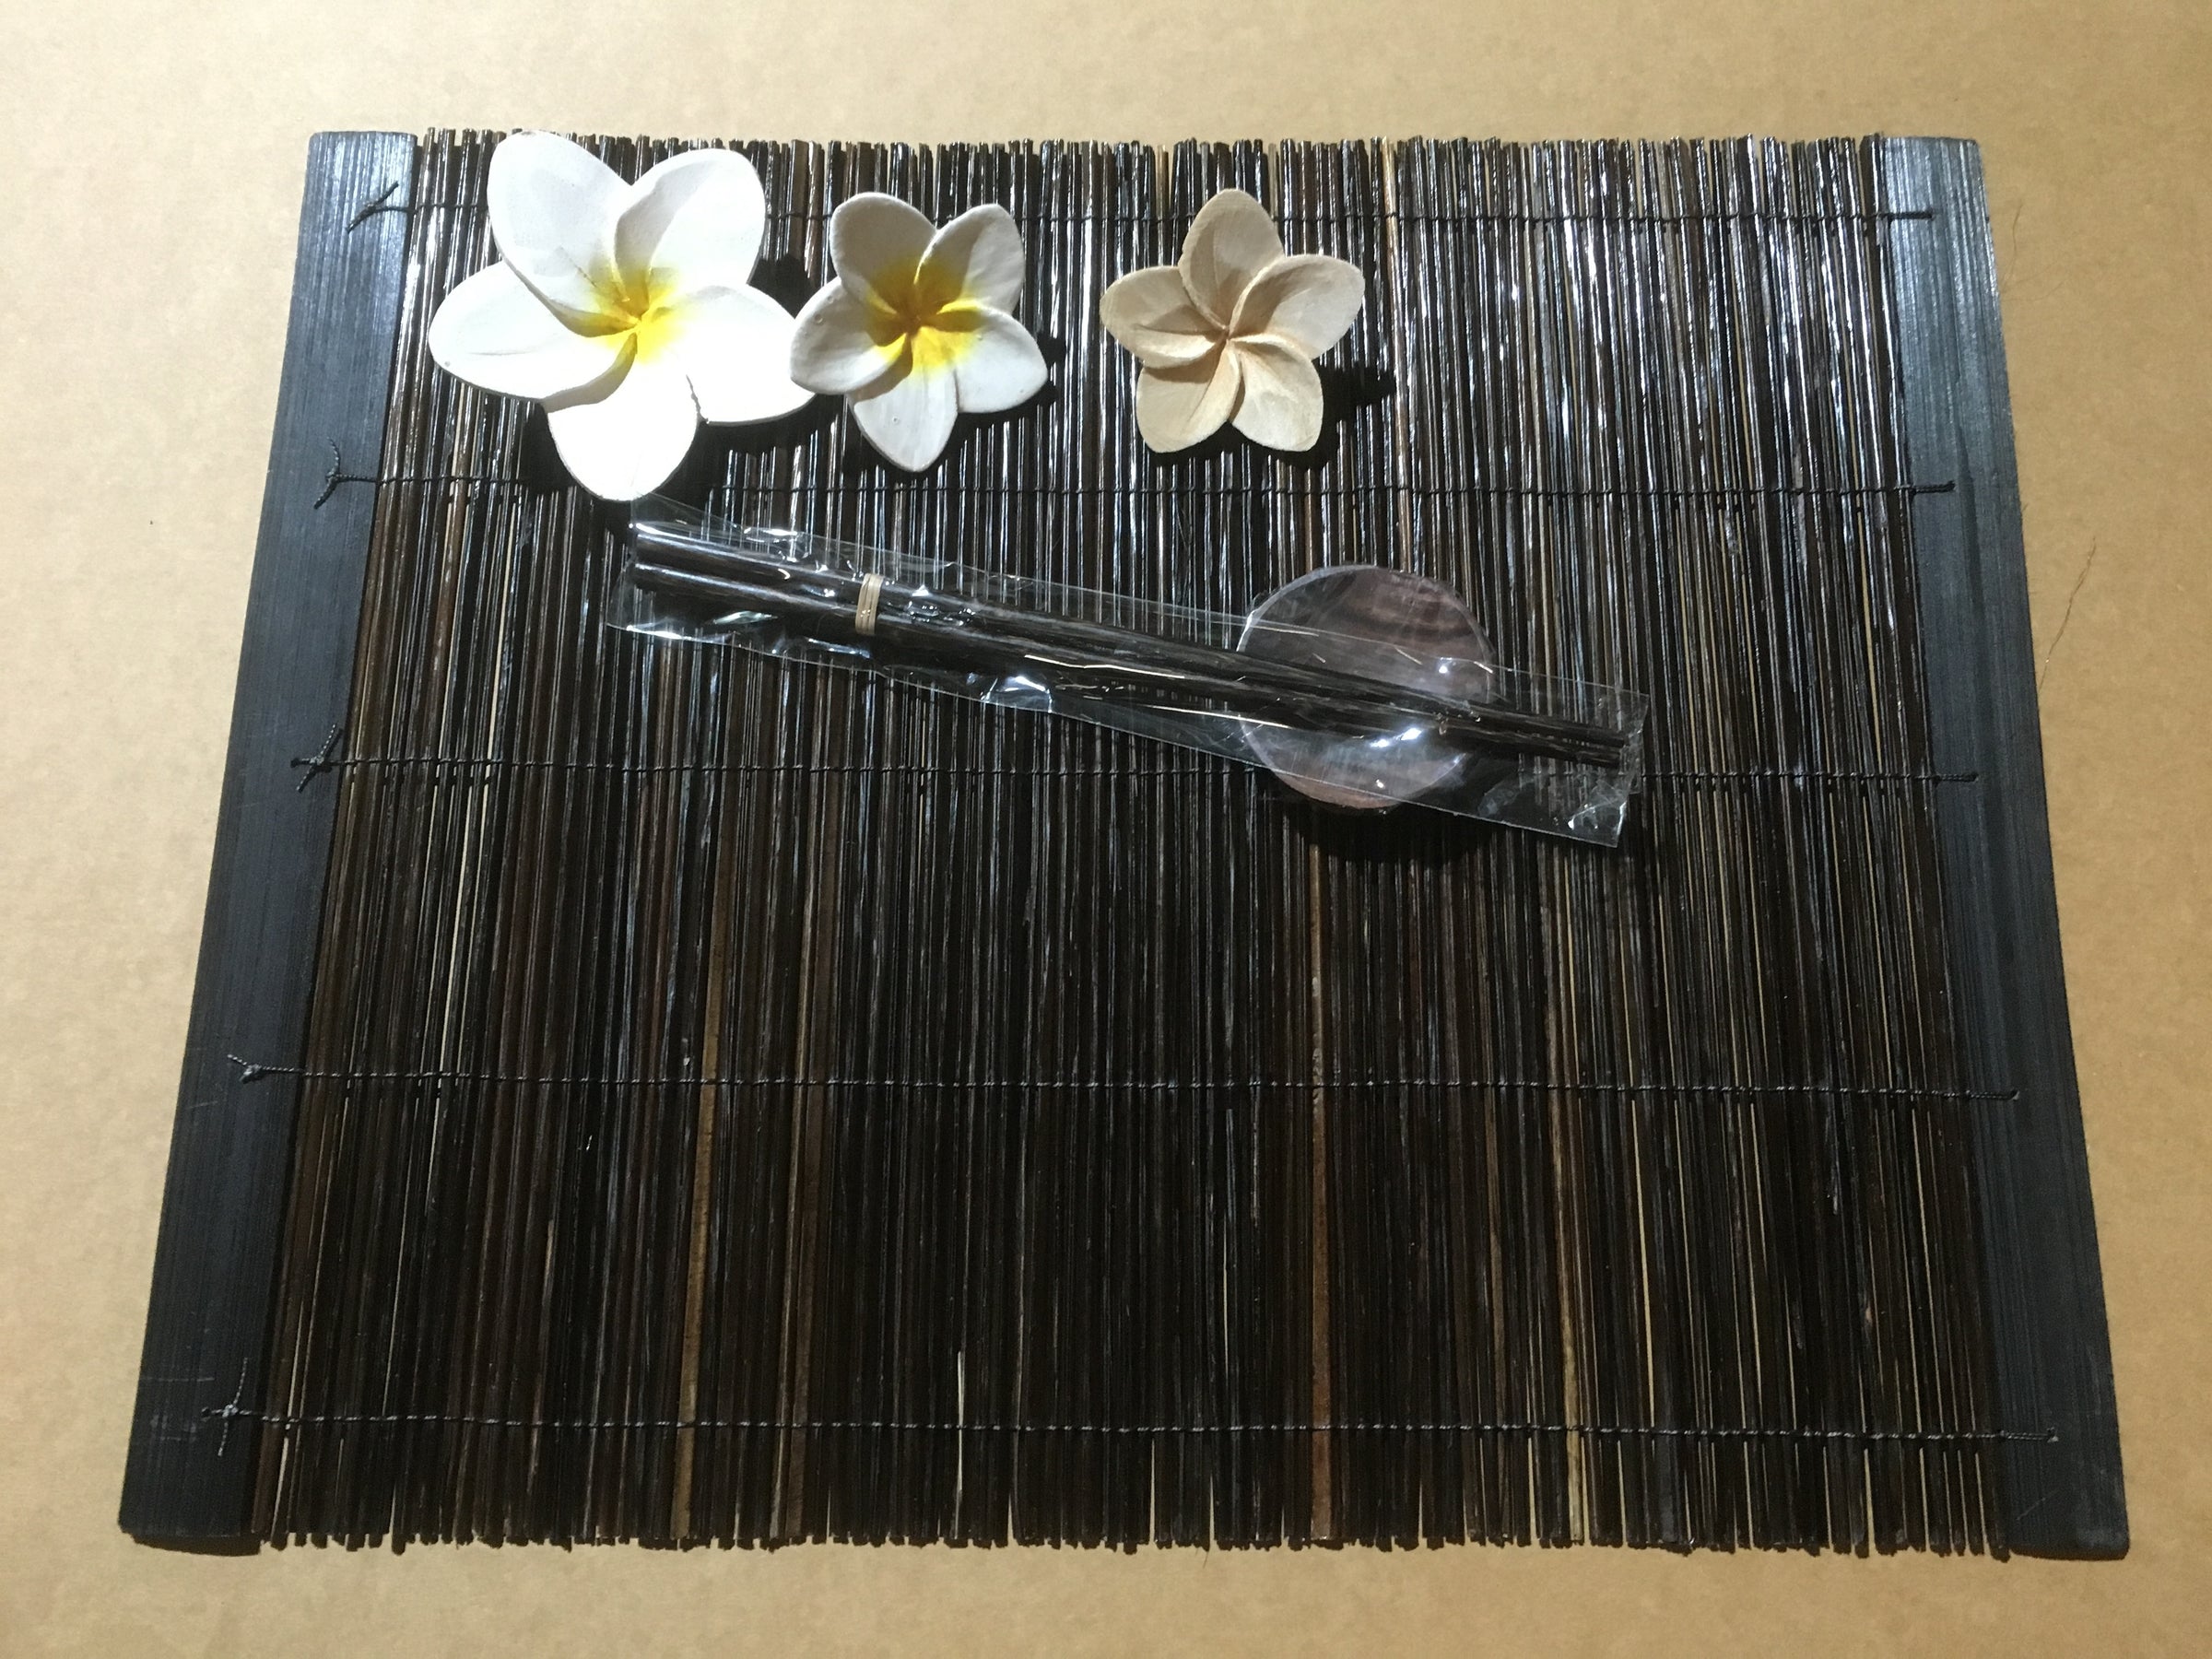 Balinese Bamboo Lidi Stick Placemats, Spice Bowls and Chopsticks 4pk